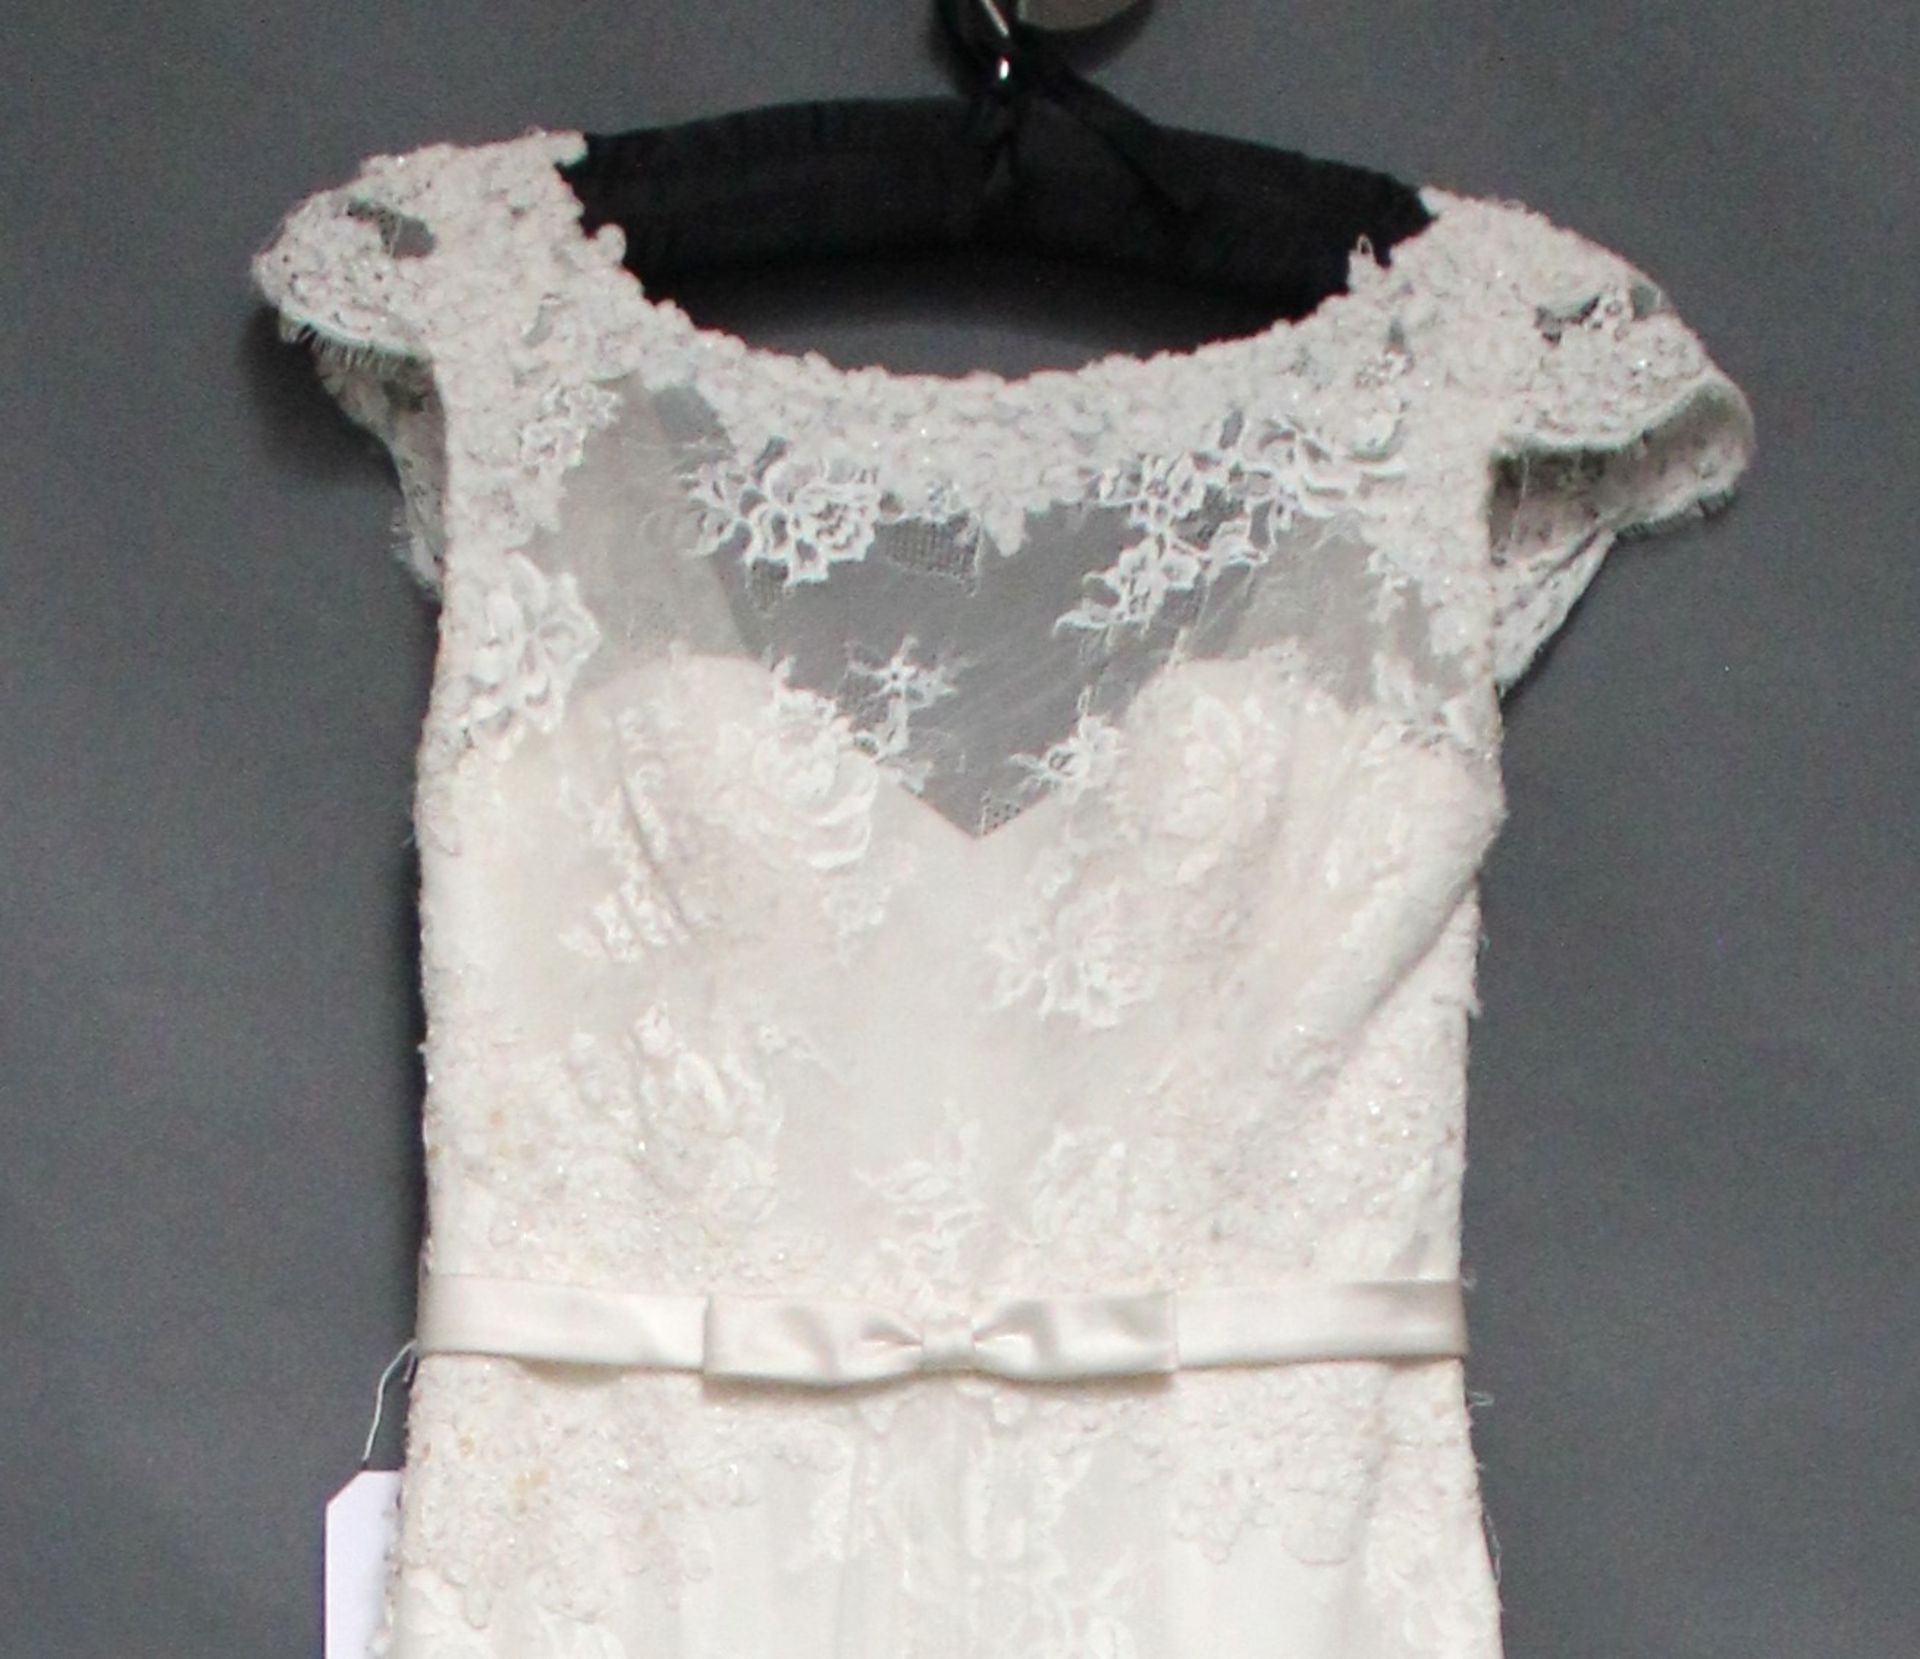 1 x LUSAN MANDONGUS/ ANNASUL Y Lace Overlay Full Skirt Designer Wedding Dress RRP £1,500 UK14 - Image 3 of 7